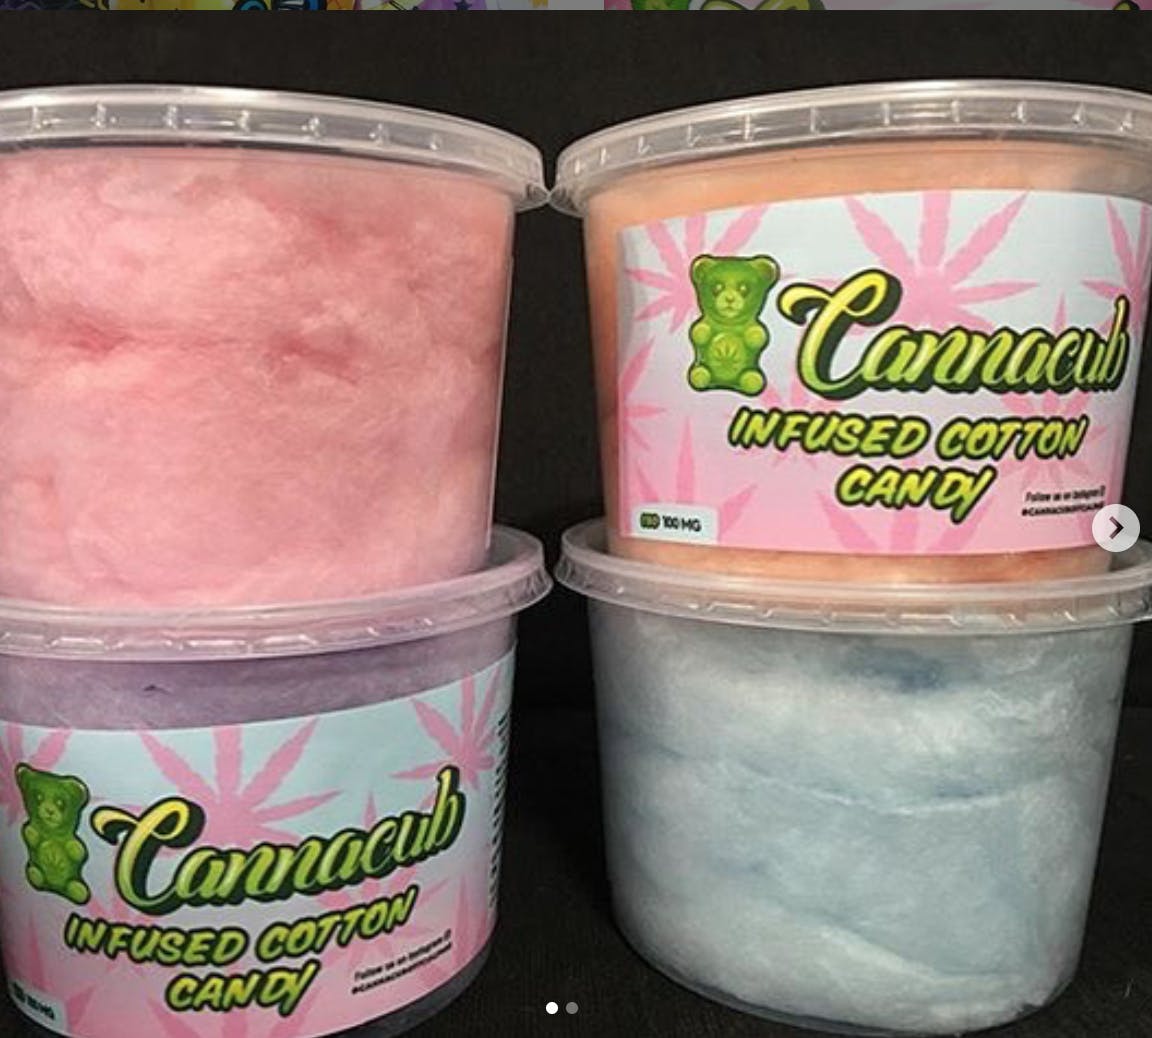 edible-cannacub-cotton-candy-cbd-only